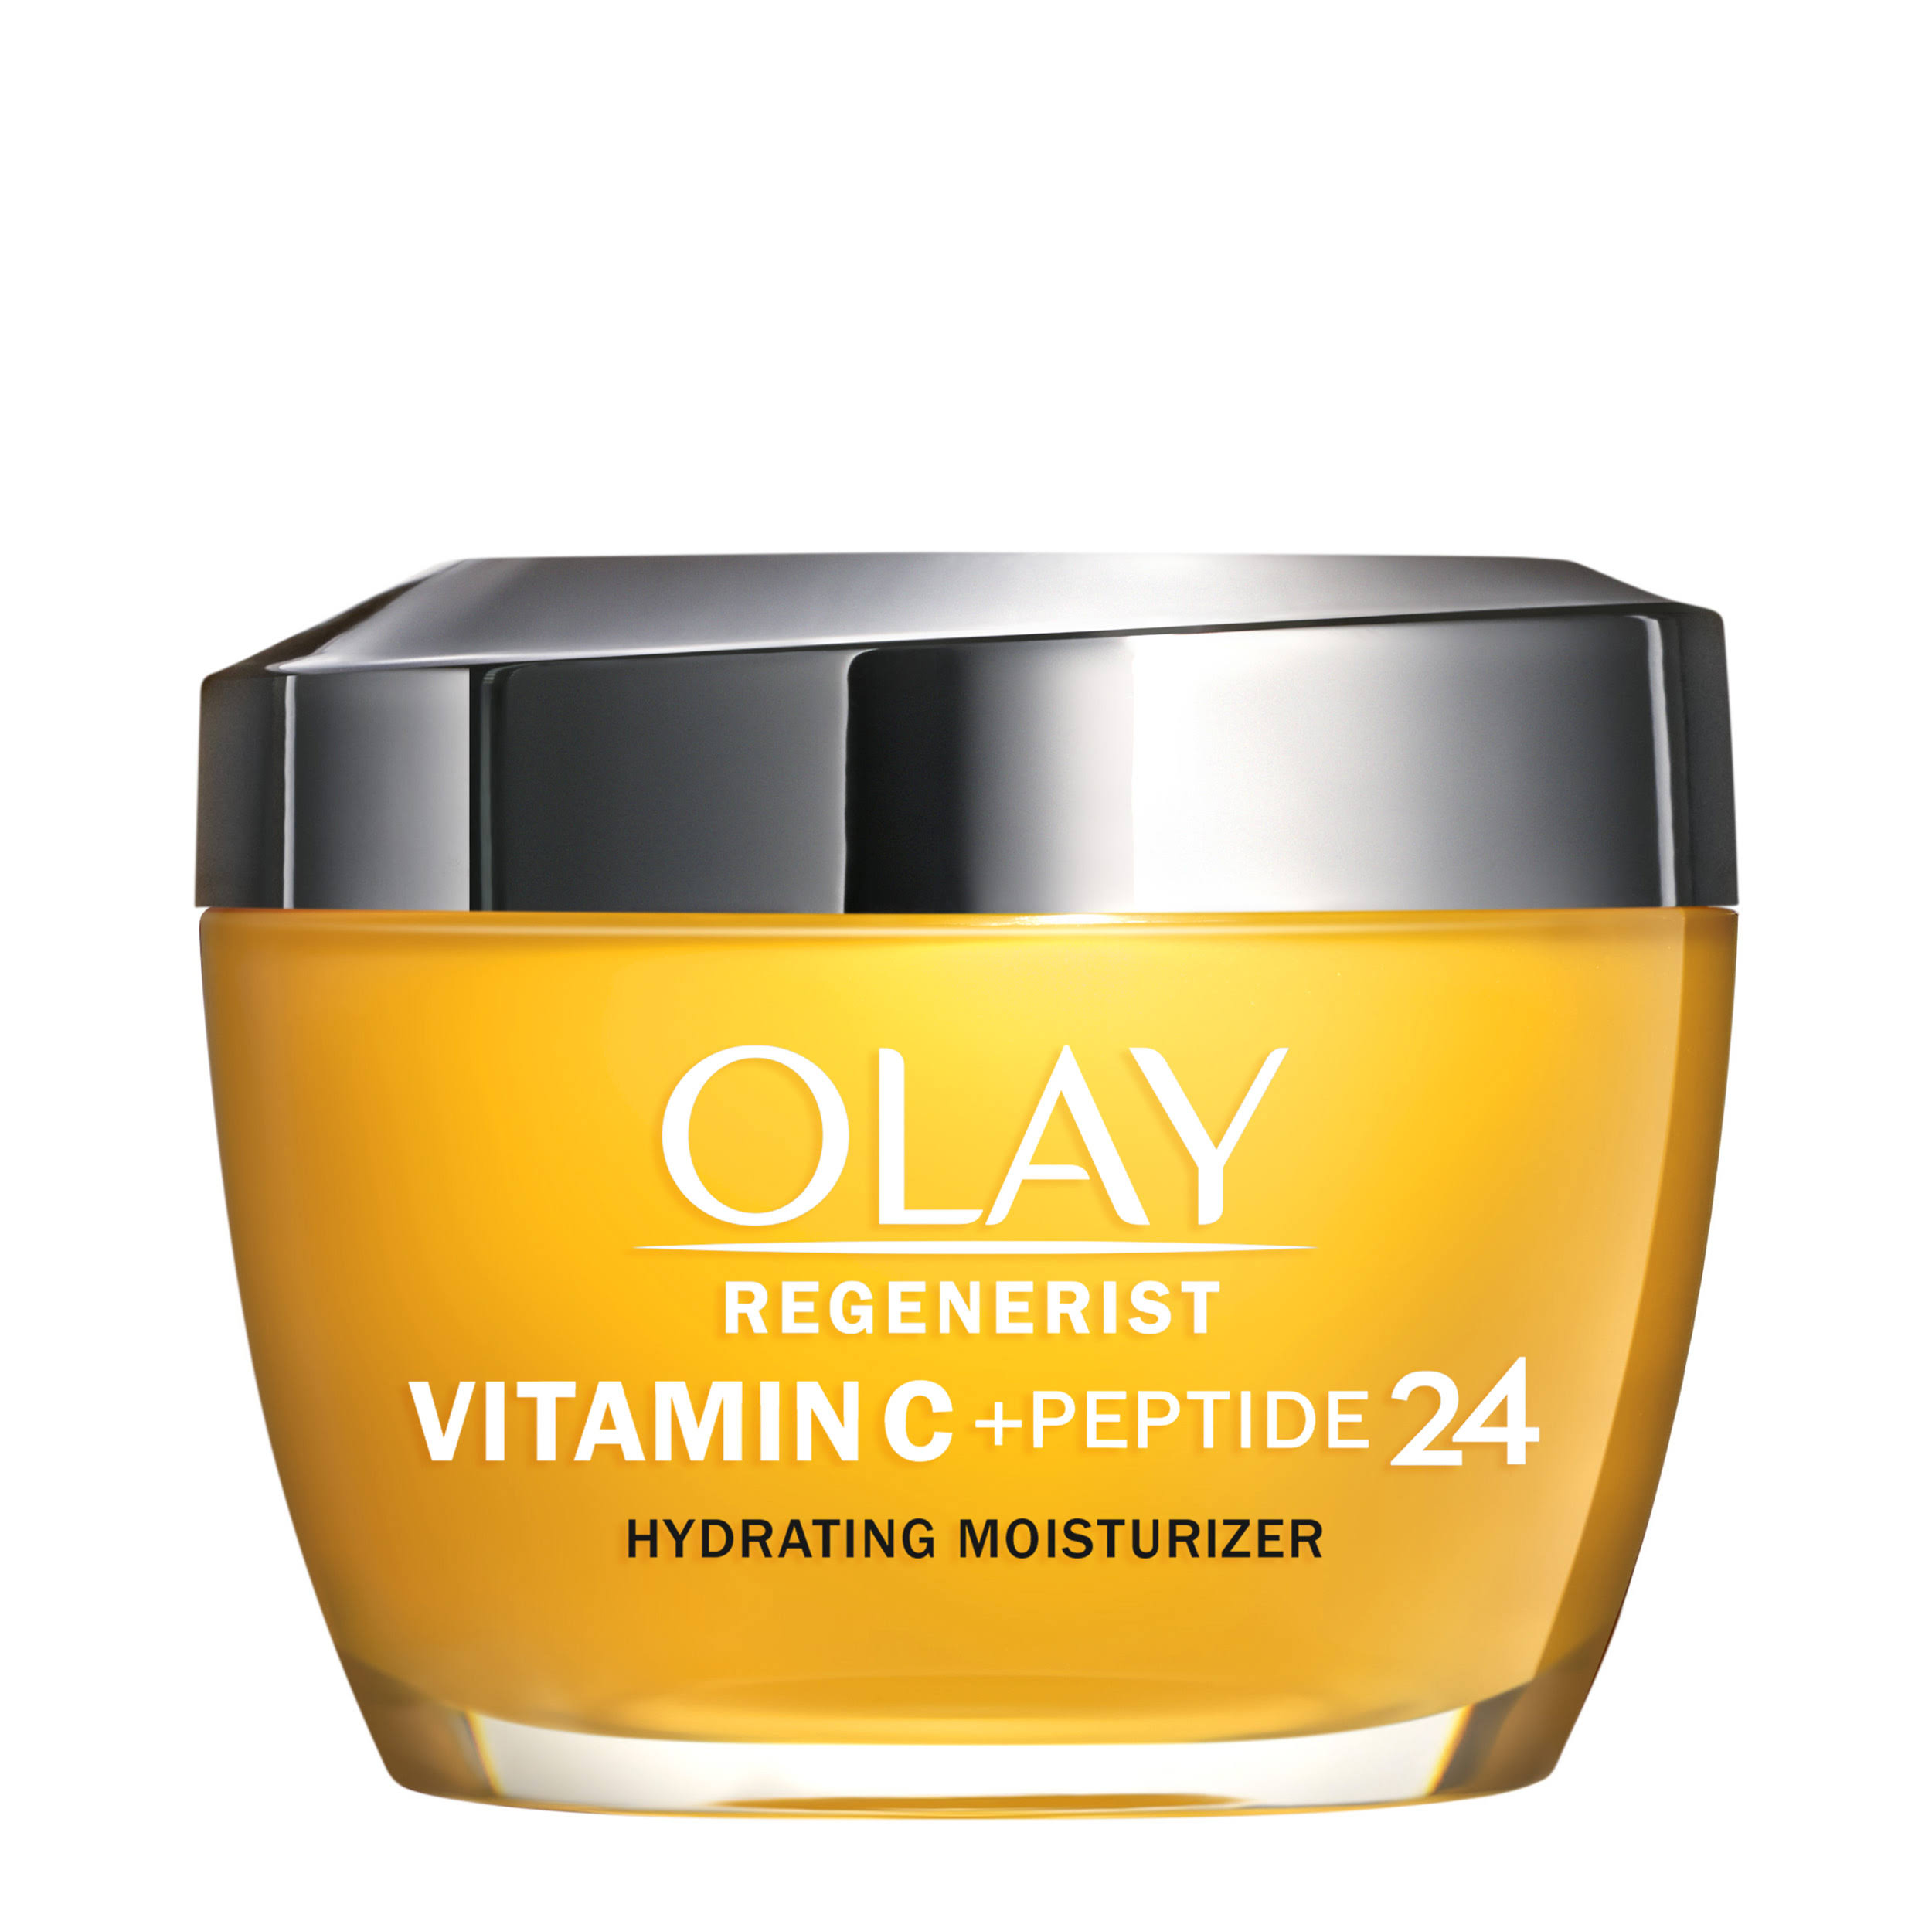 Olay regenerist vitamin c & peptide-24 hydrating moisturizer, 1.7 oz